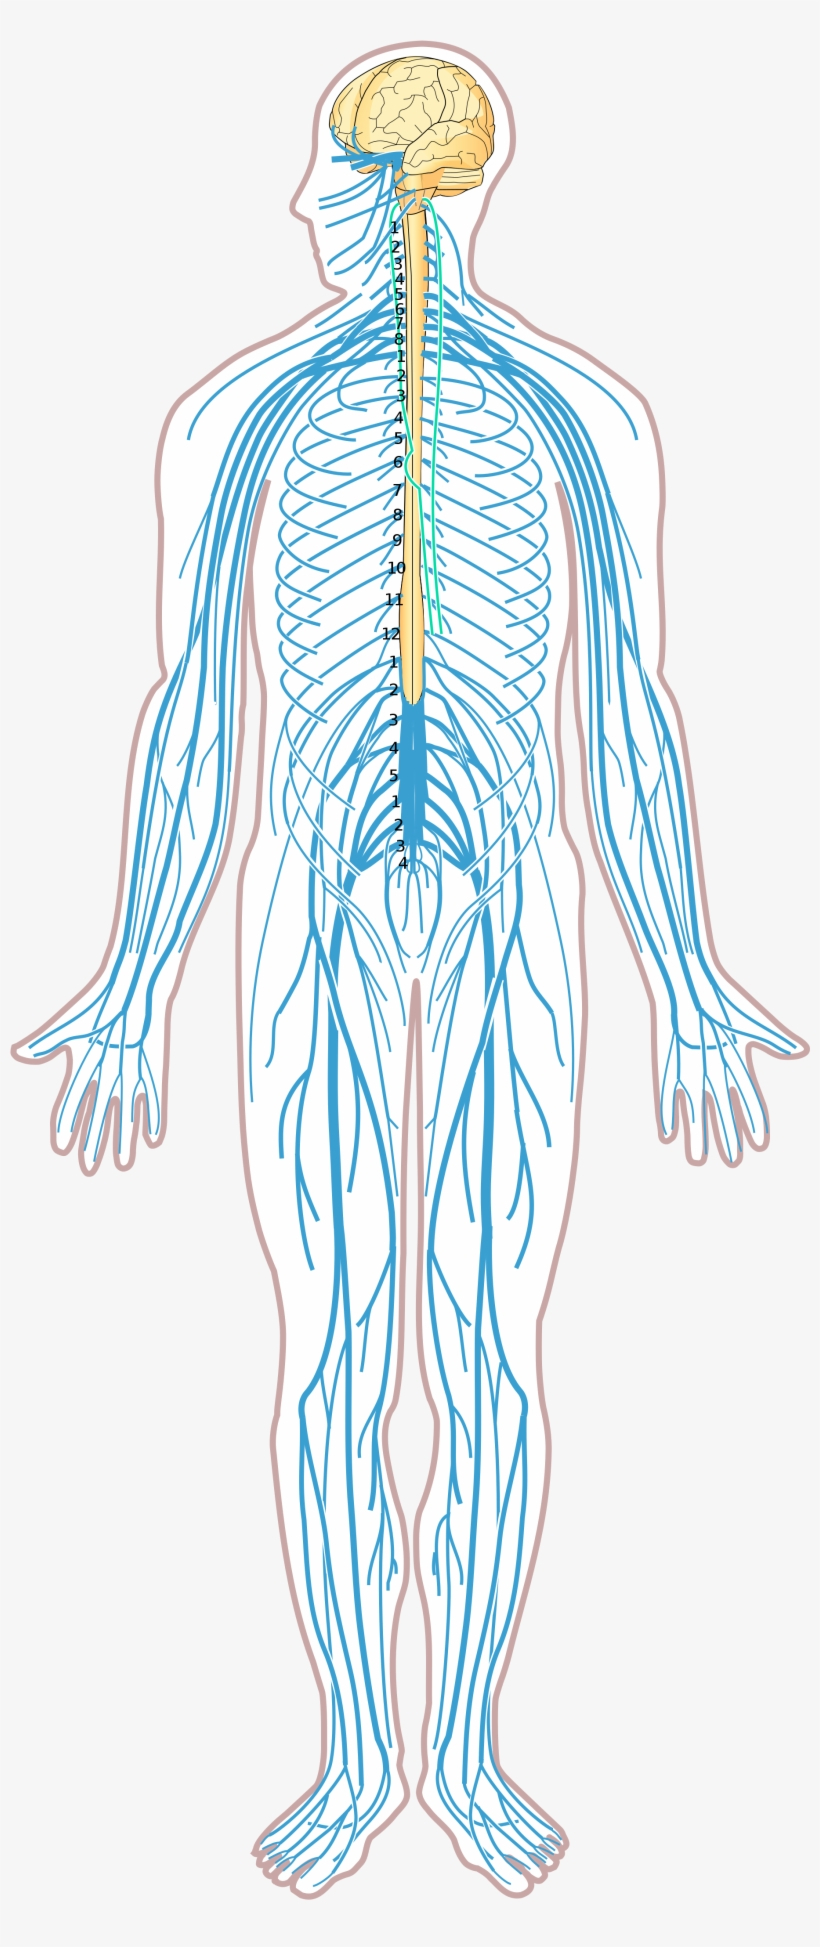 Nervous System Diagram - exatin.info